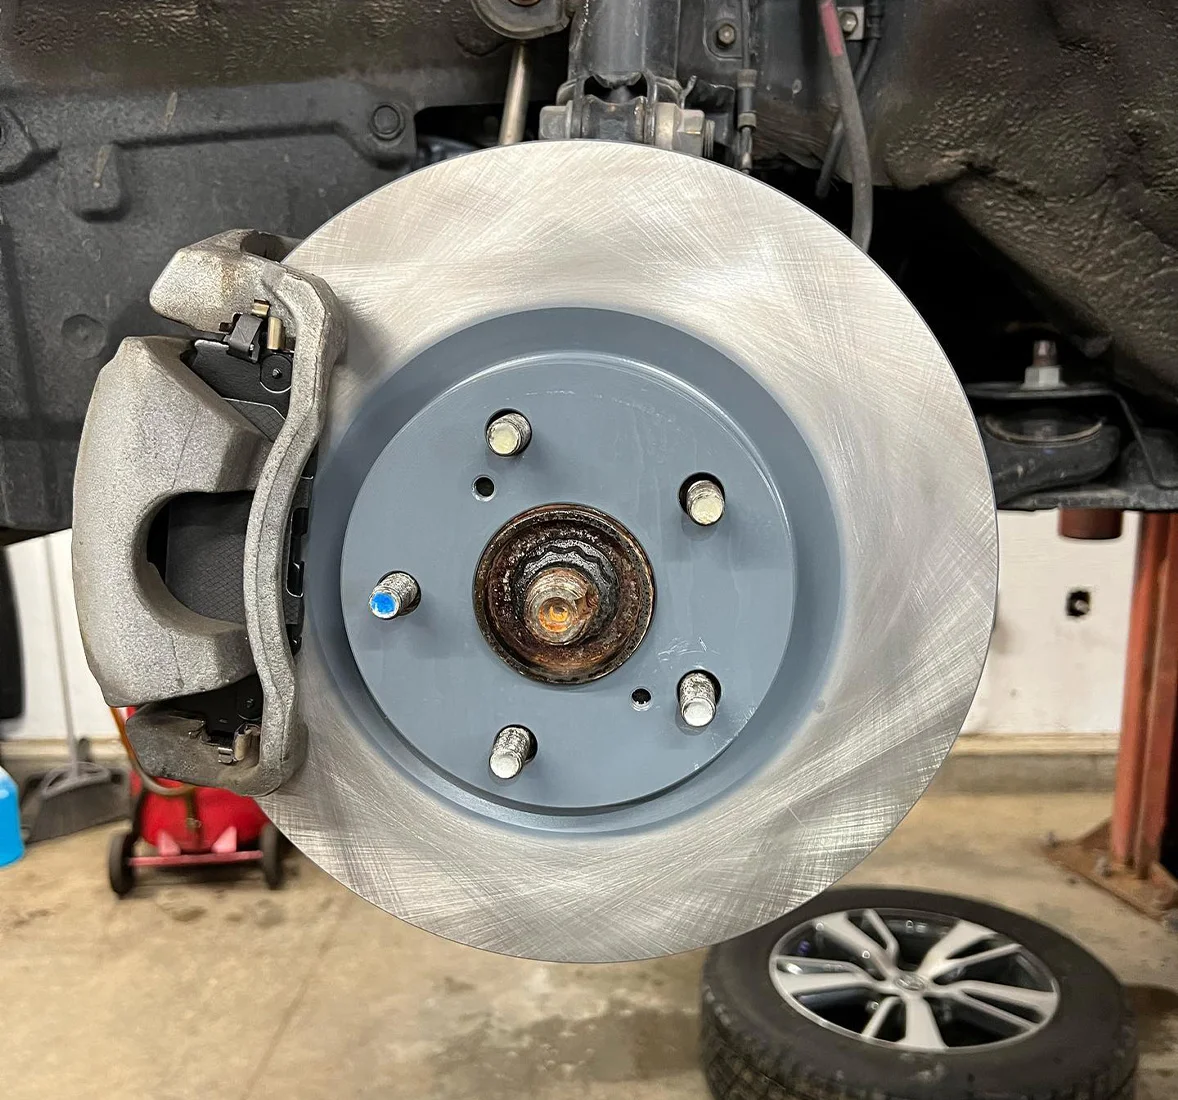 Closeup image of brake rotor, brak caliper, brake pad, and a tire. Concept image of brake repair at Enright Automotive.